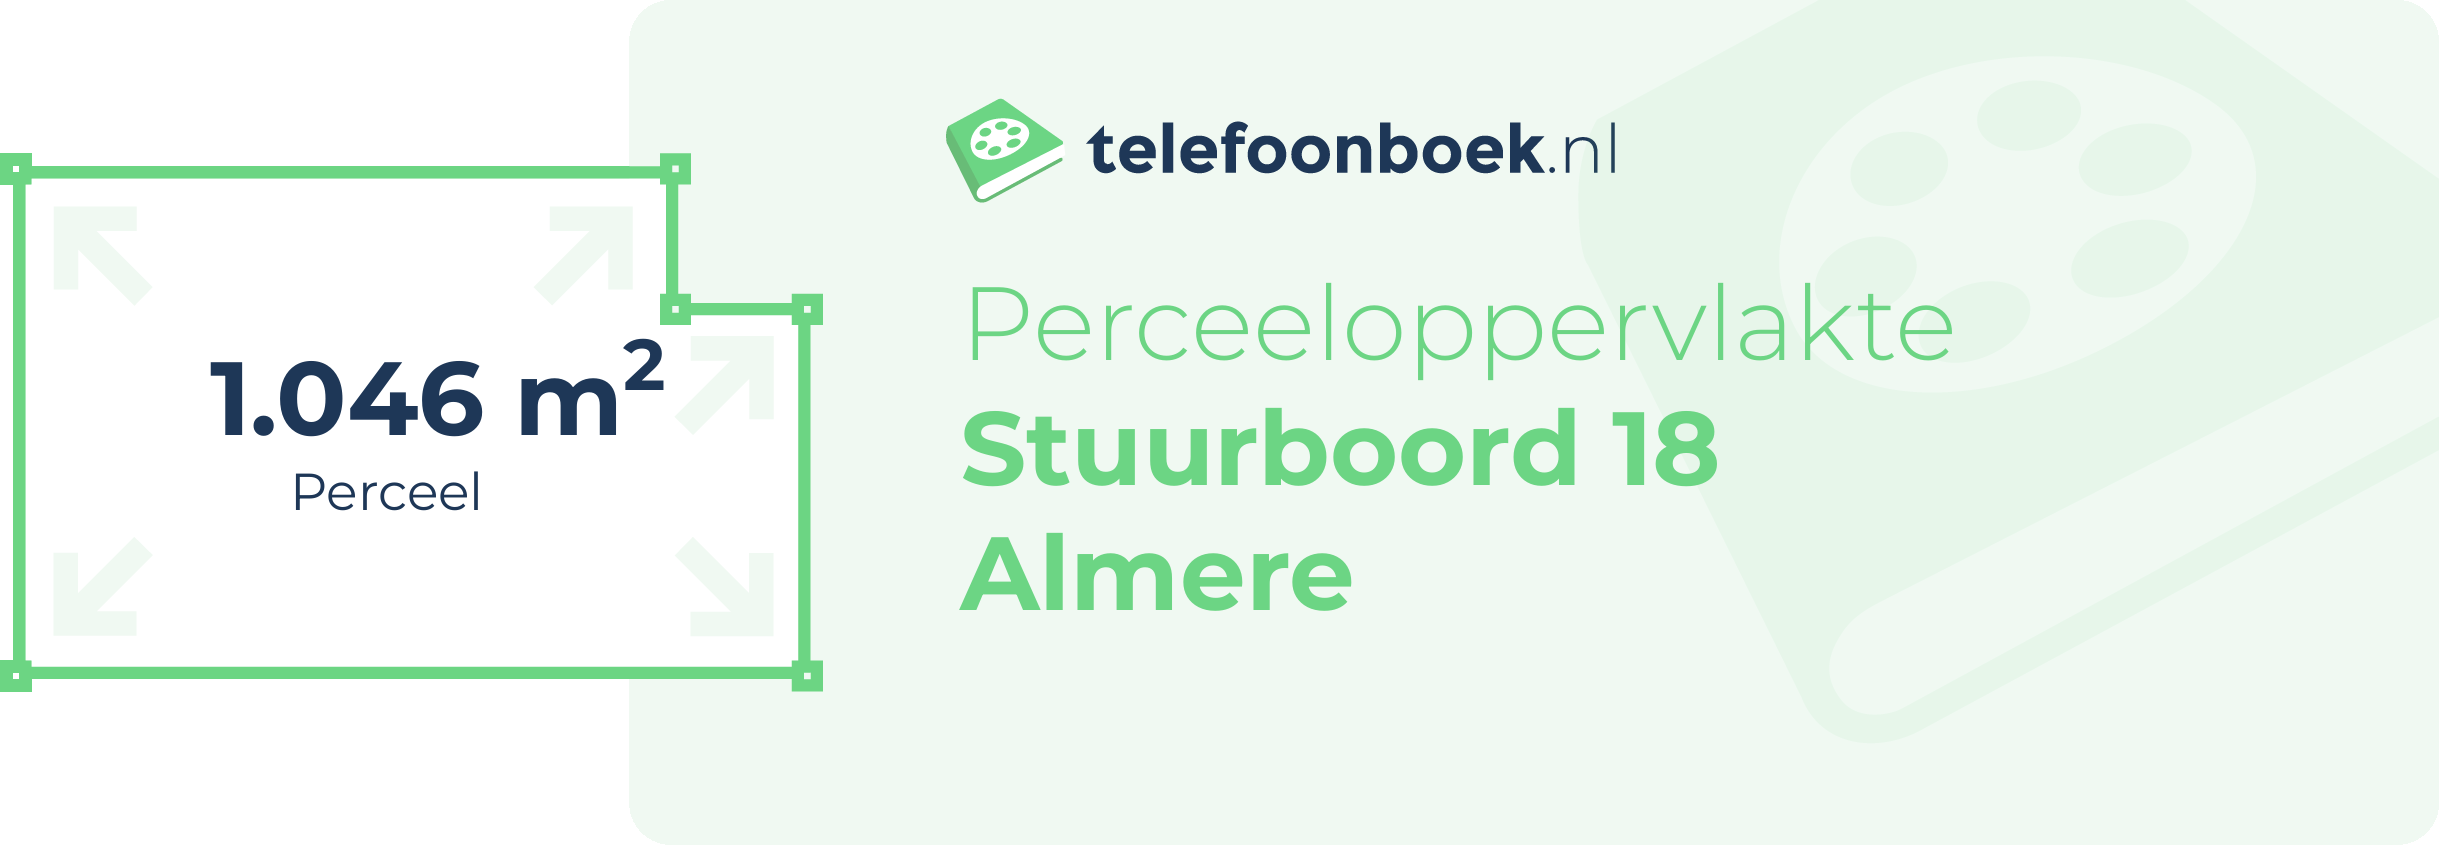 Perceeloppervlakte Stuurboord 18 Almere